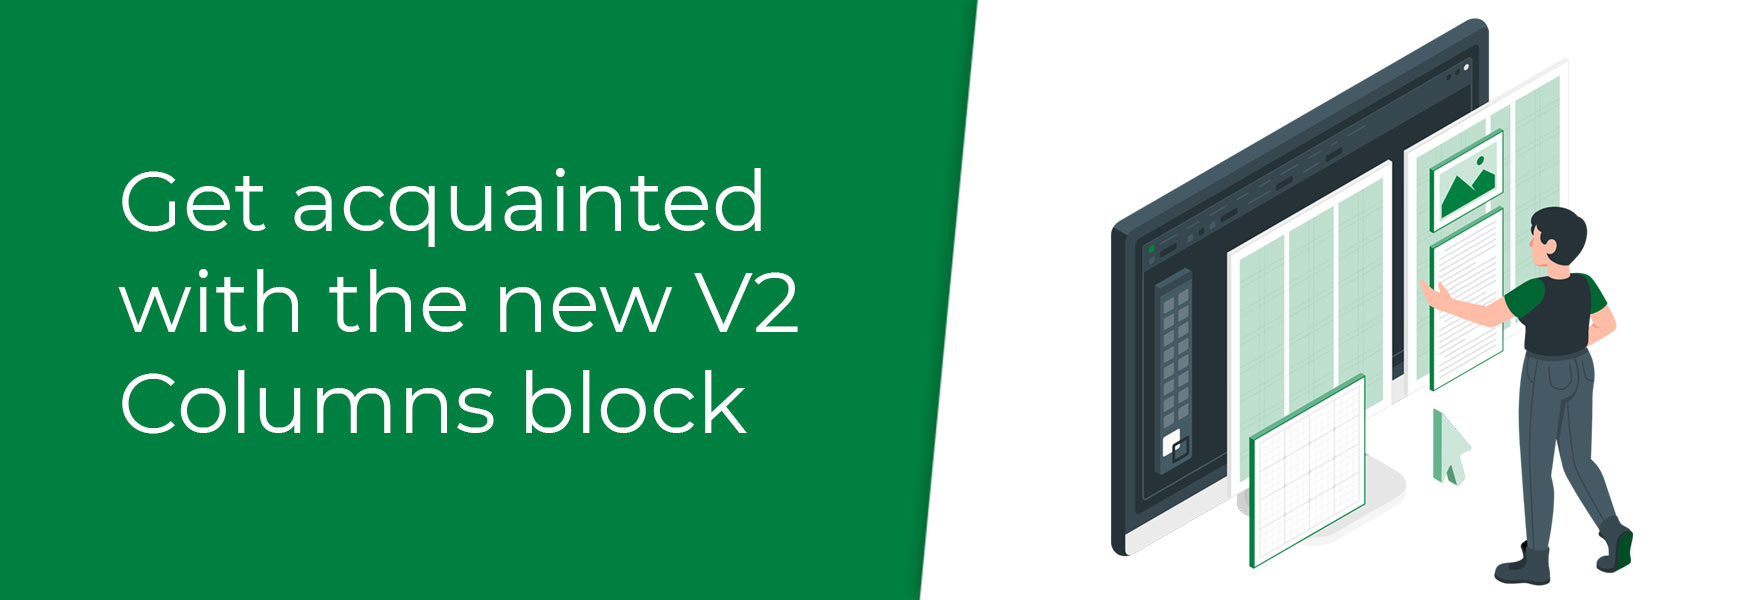 The new V2 Columns block